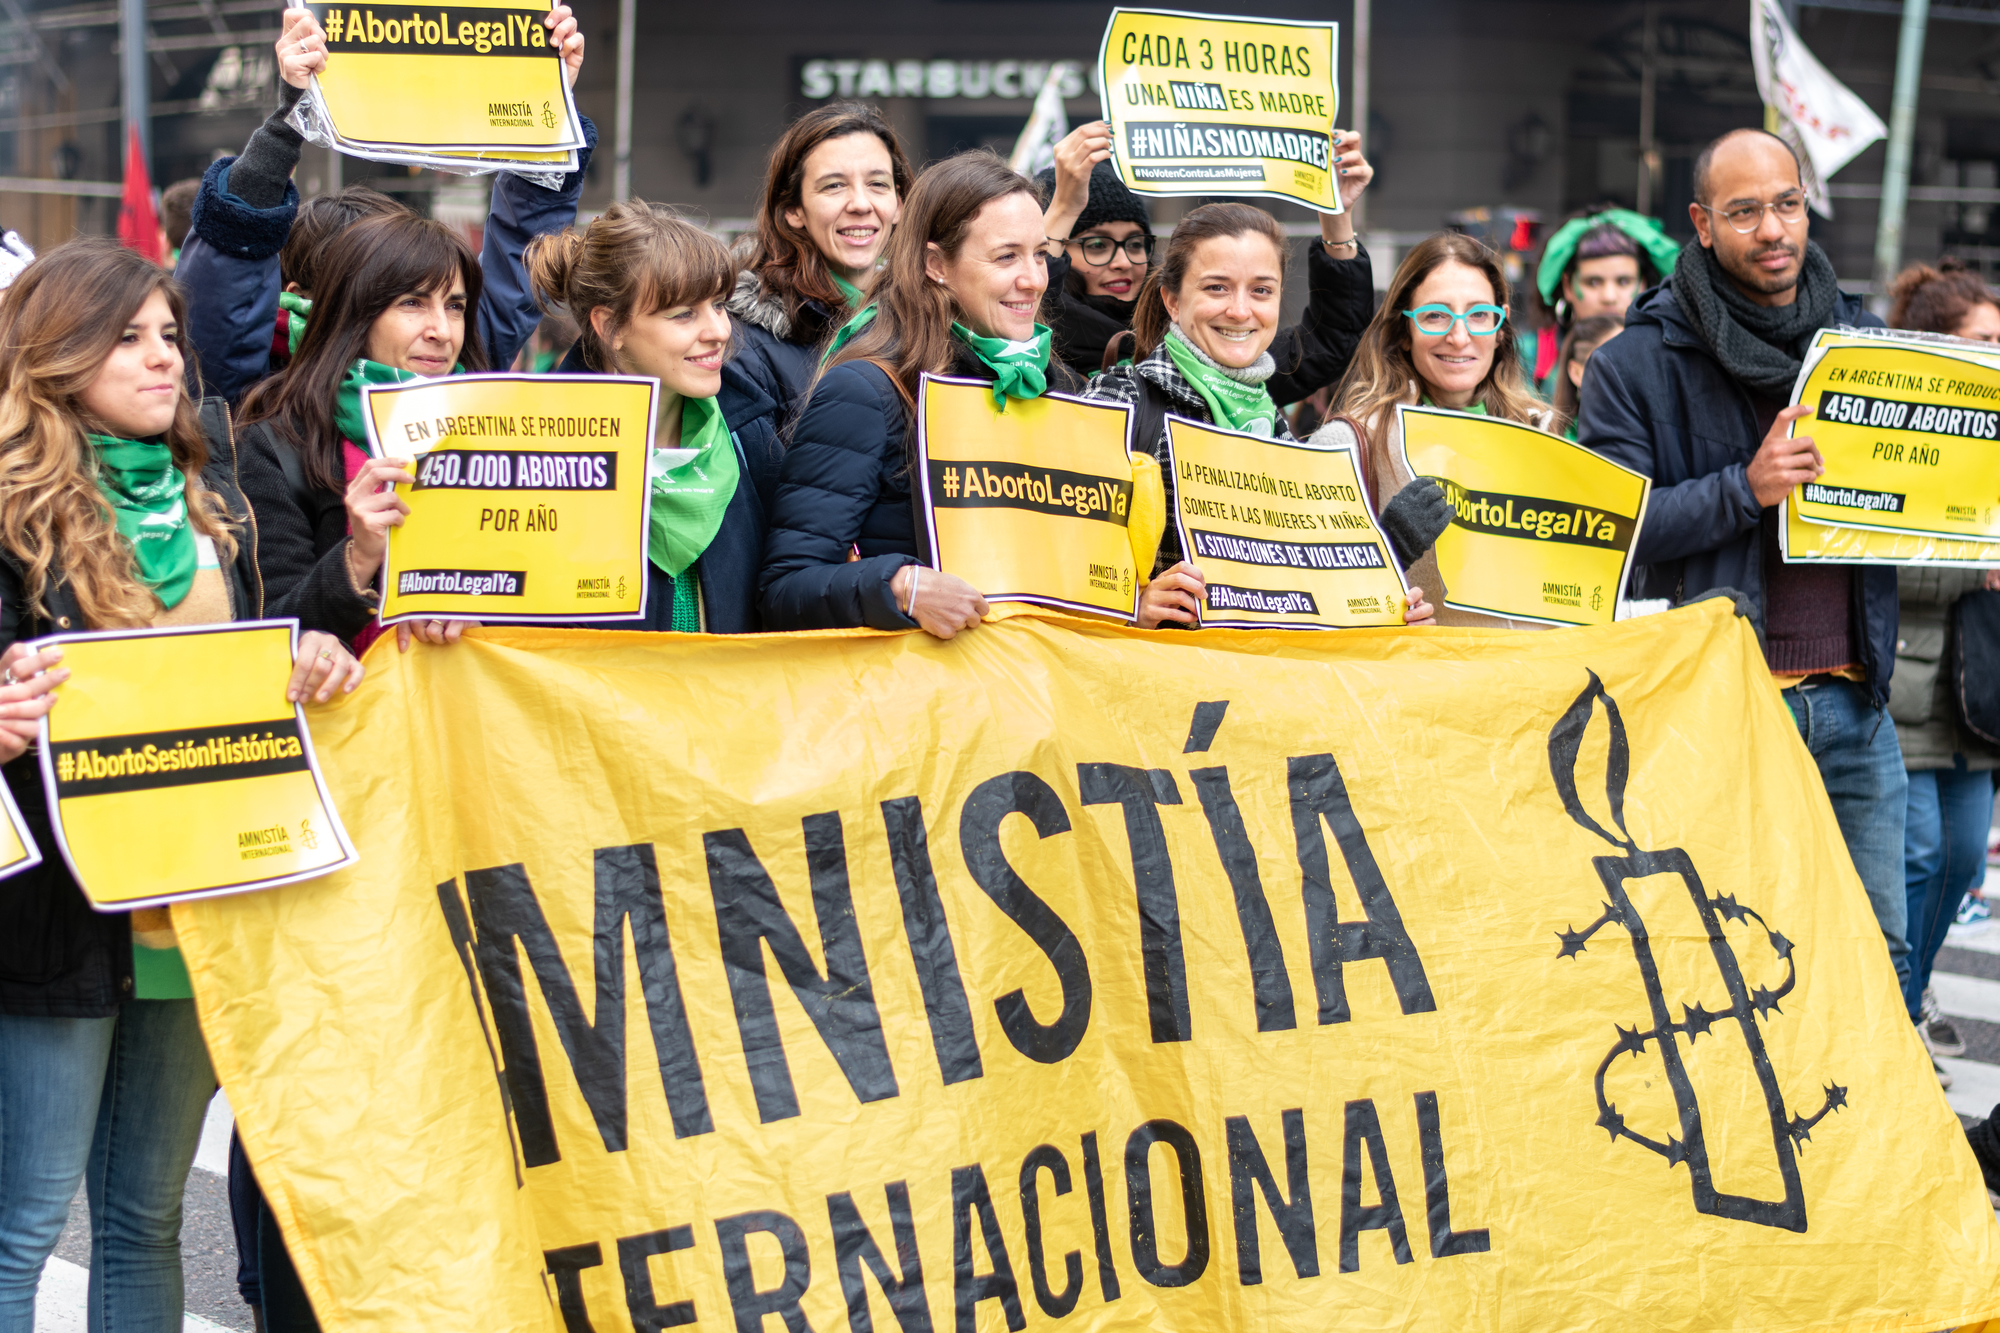 Irish legislators call on Argentinian legislators to guarantee access to safe abortion